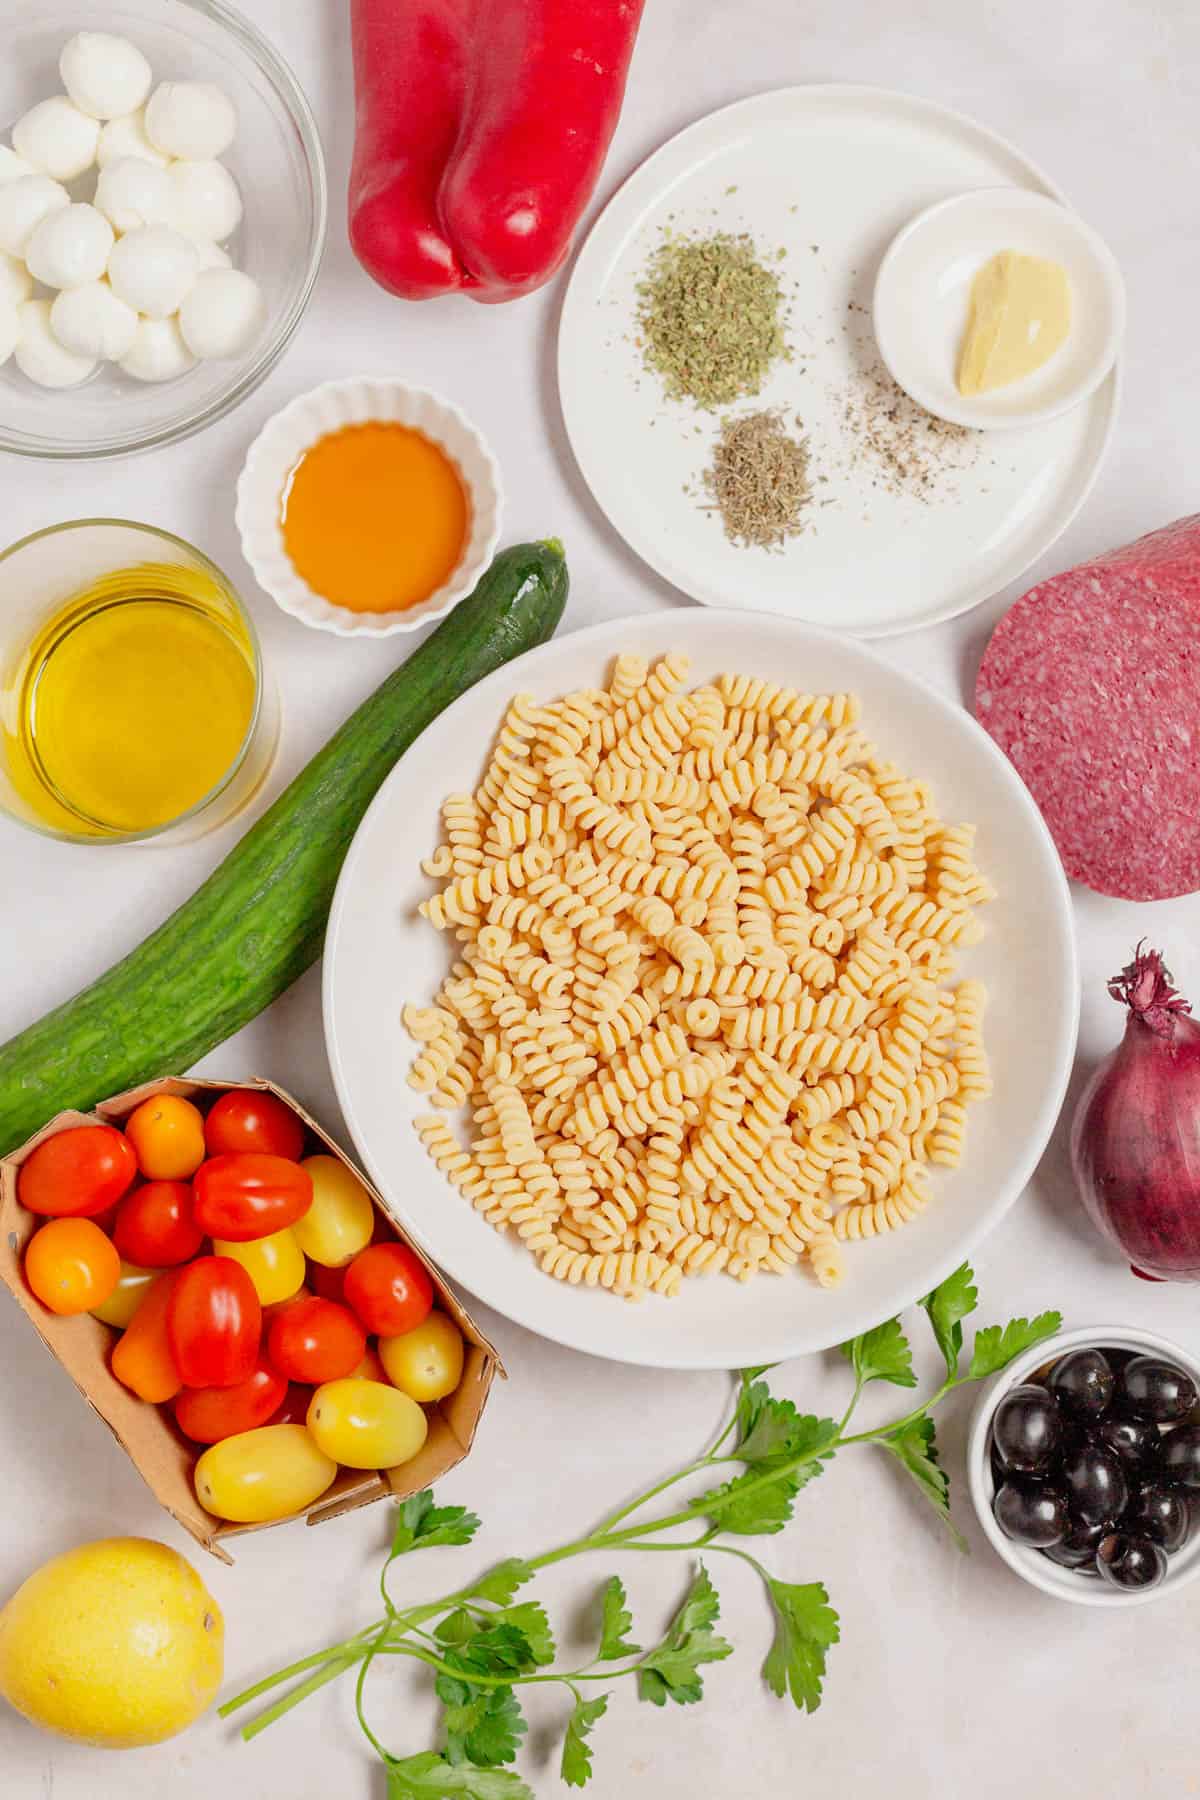 Ingredients for making Italian pasta salad.